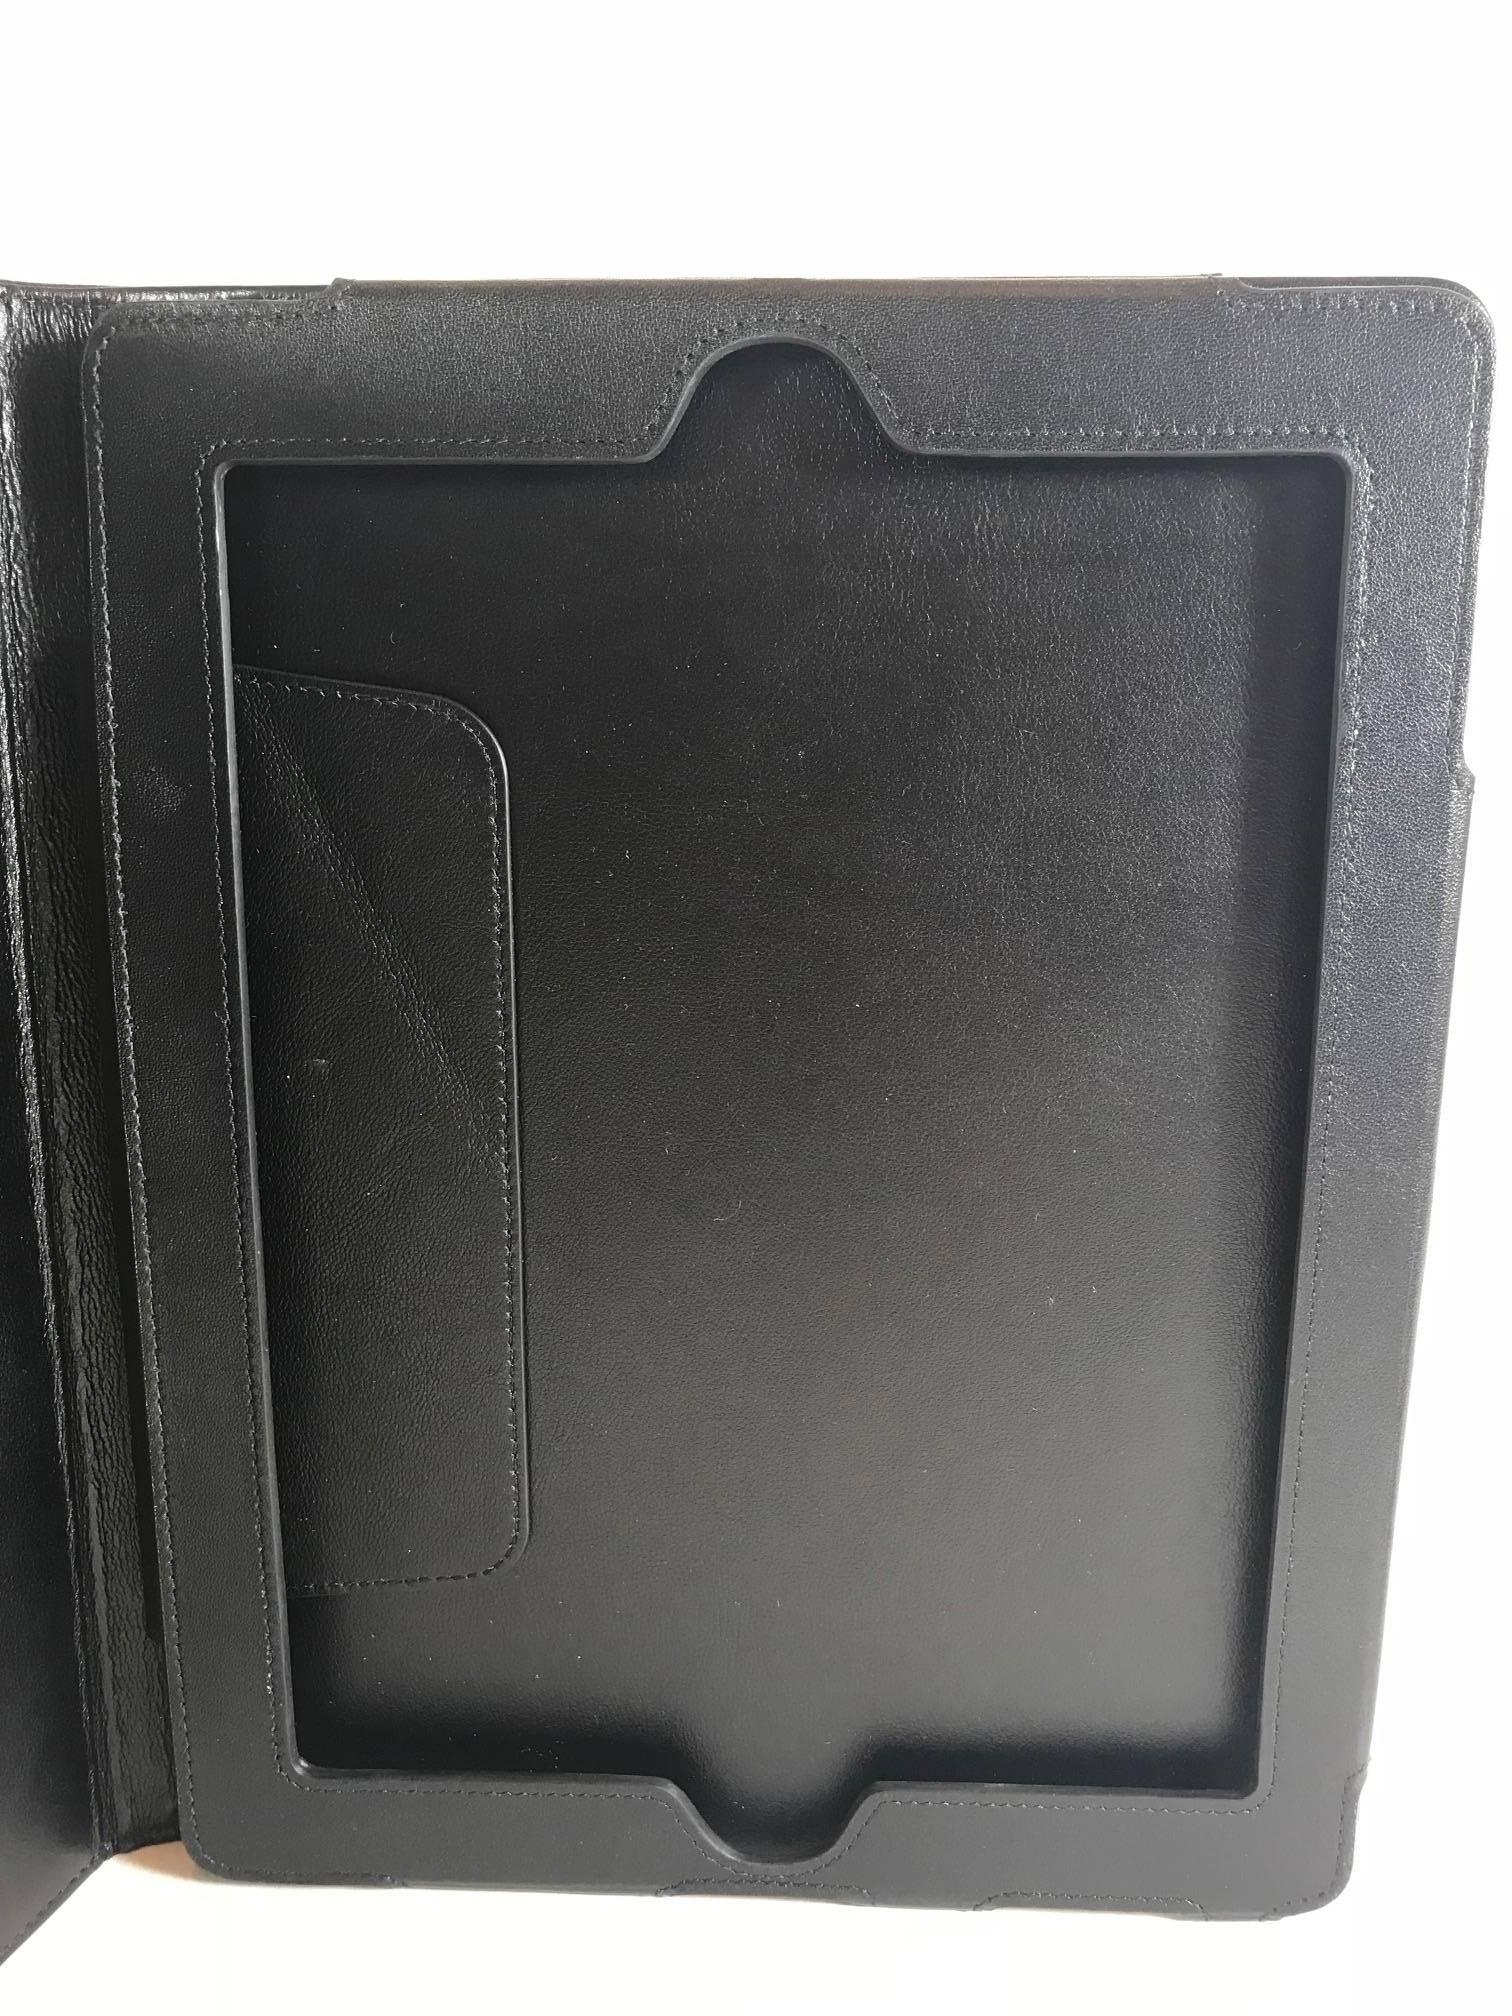 Chanel Black Ipad Case Holder 3